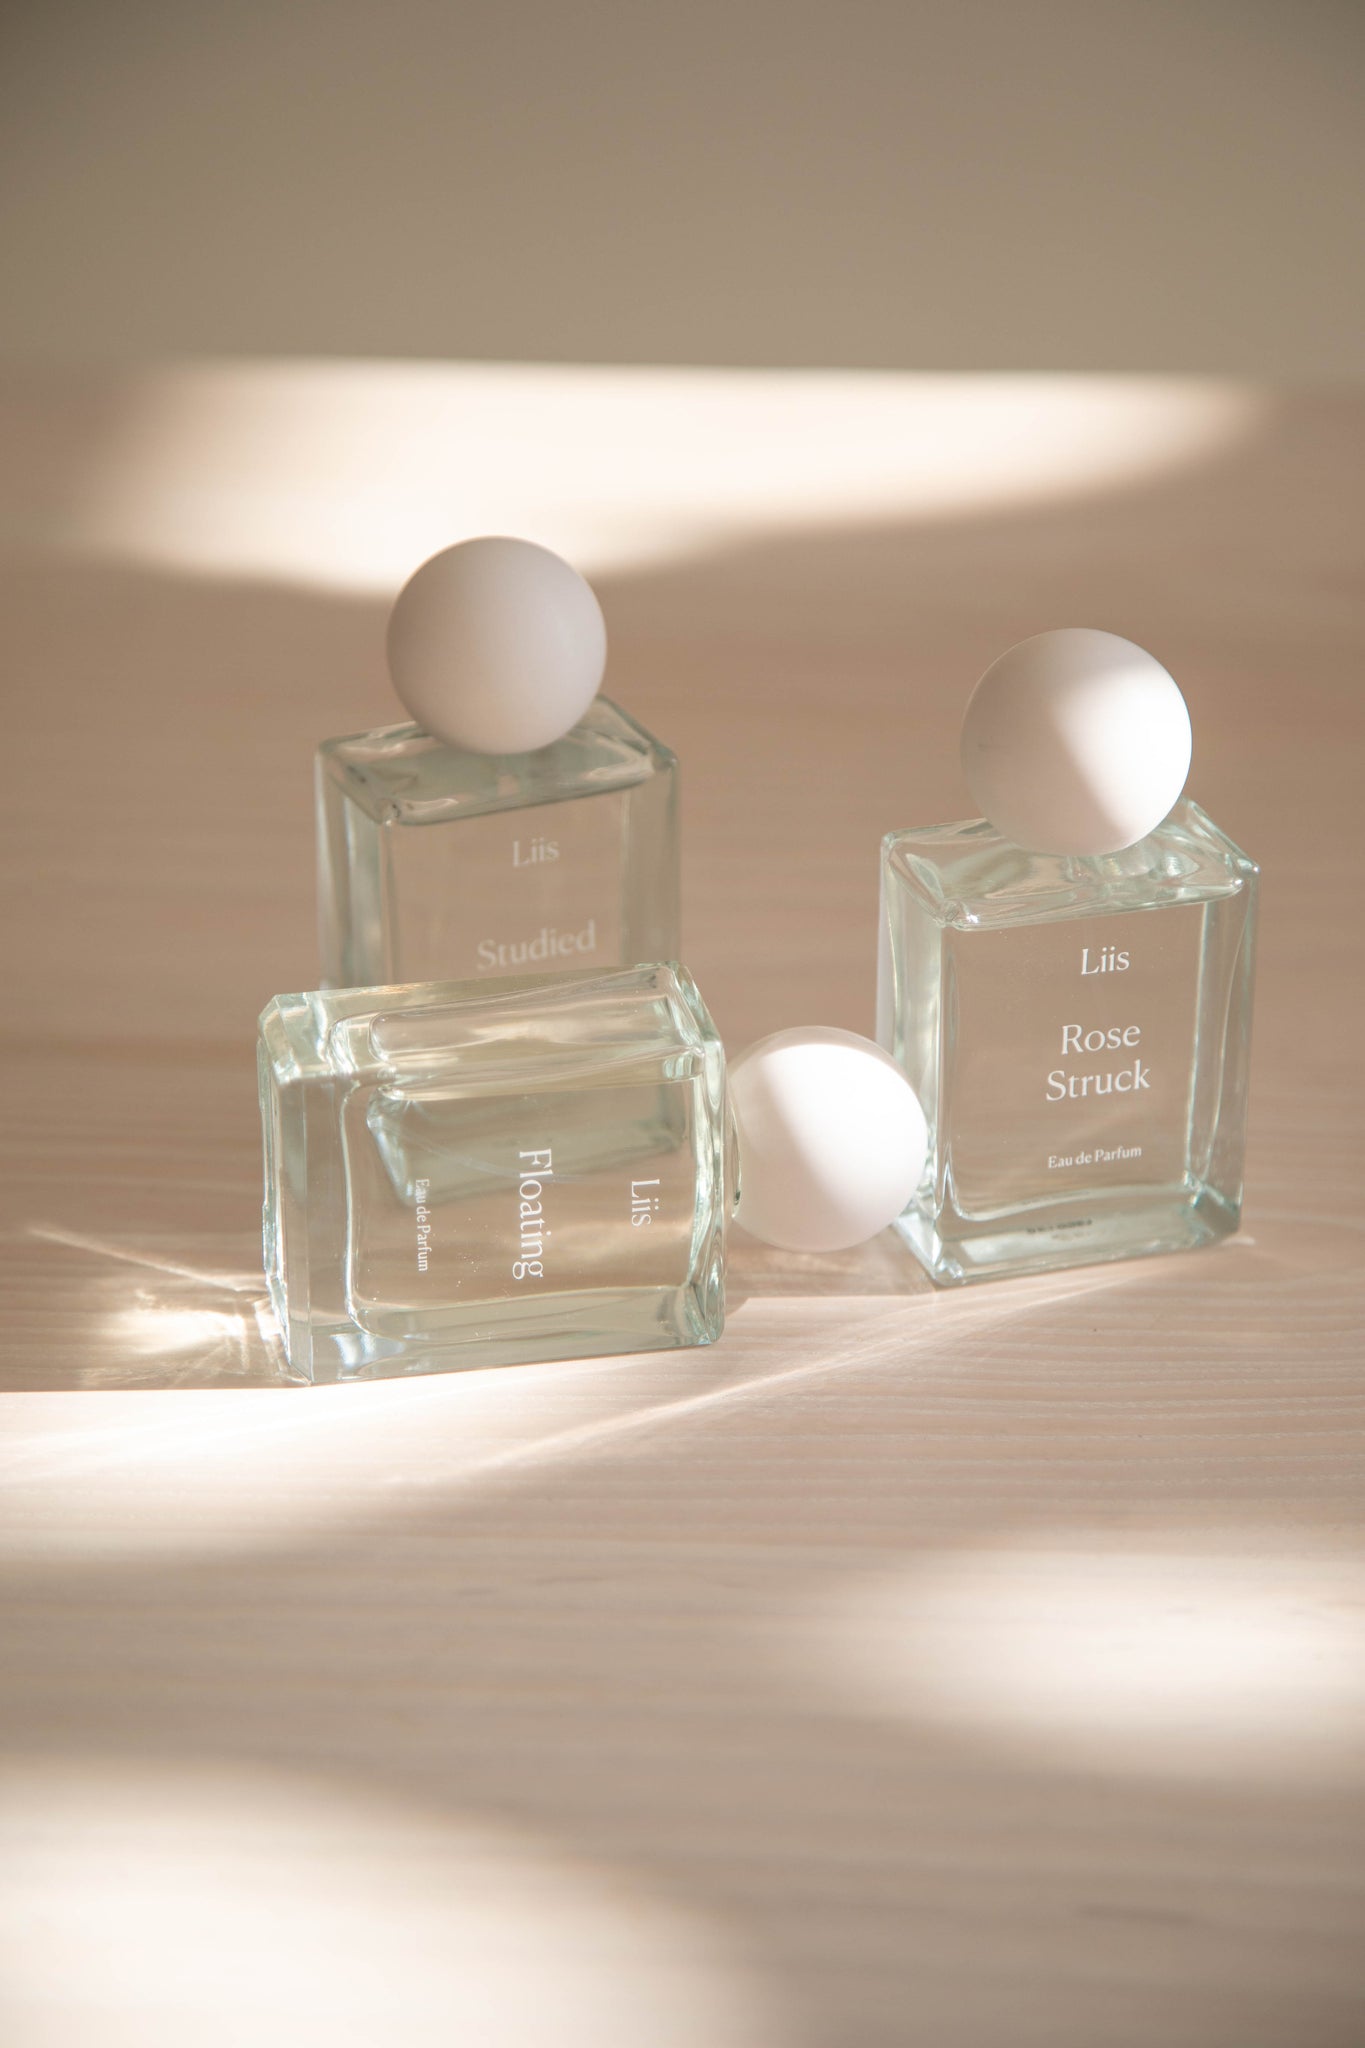 Liis Fragrances | Floating